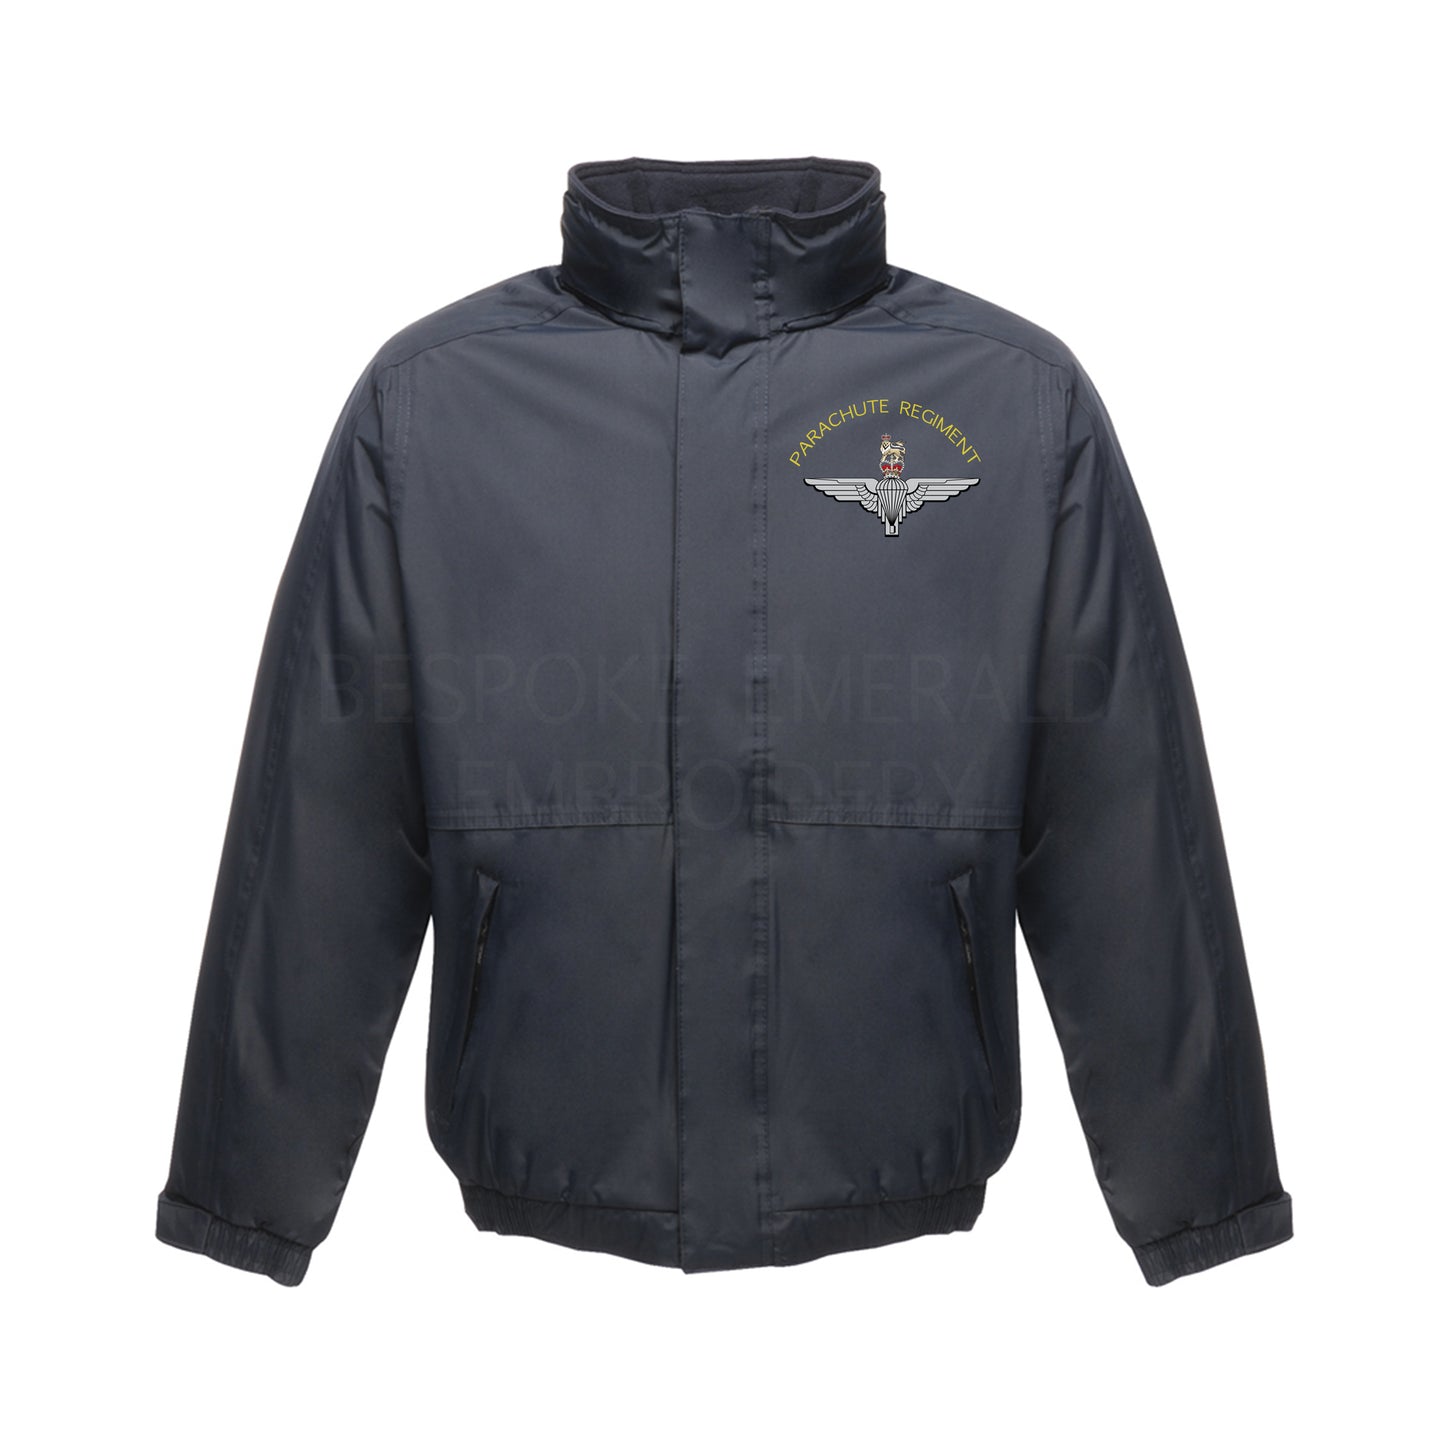 RG045 - Regatta Parachute Regiment Waterproof Jacket. - Bespoke Emerald Embroidery Ltd